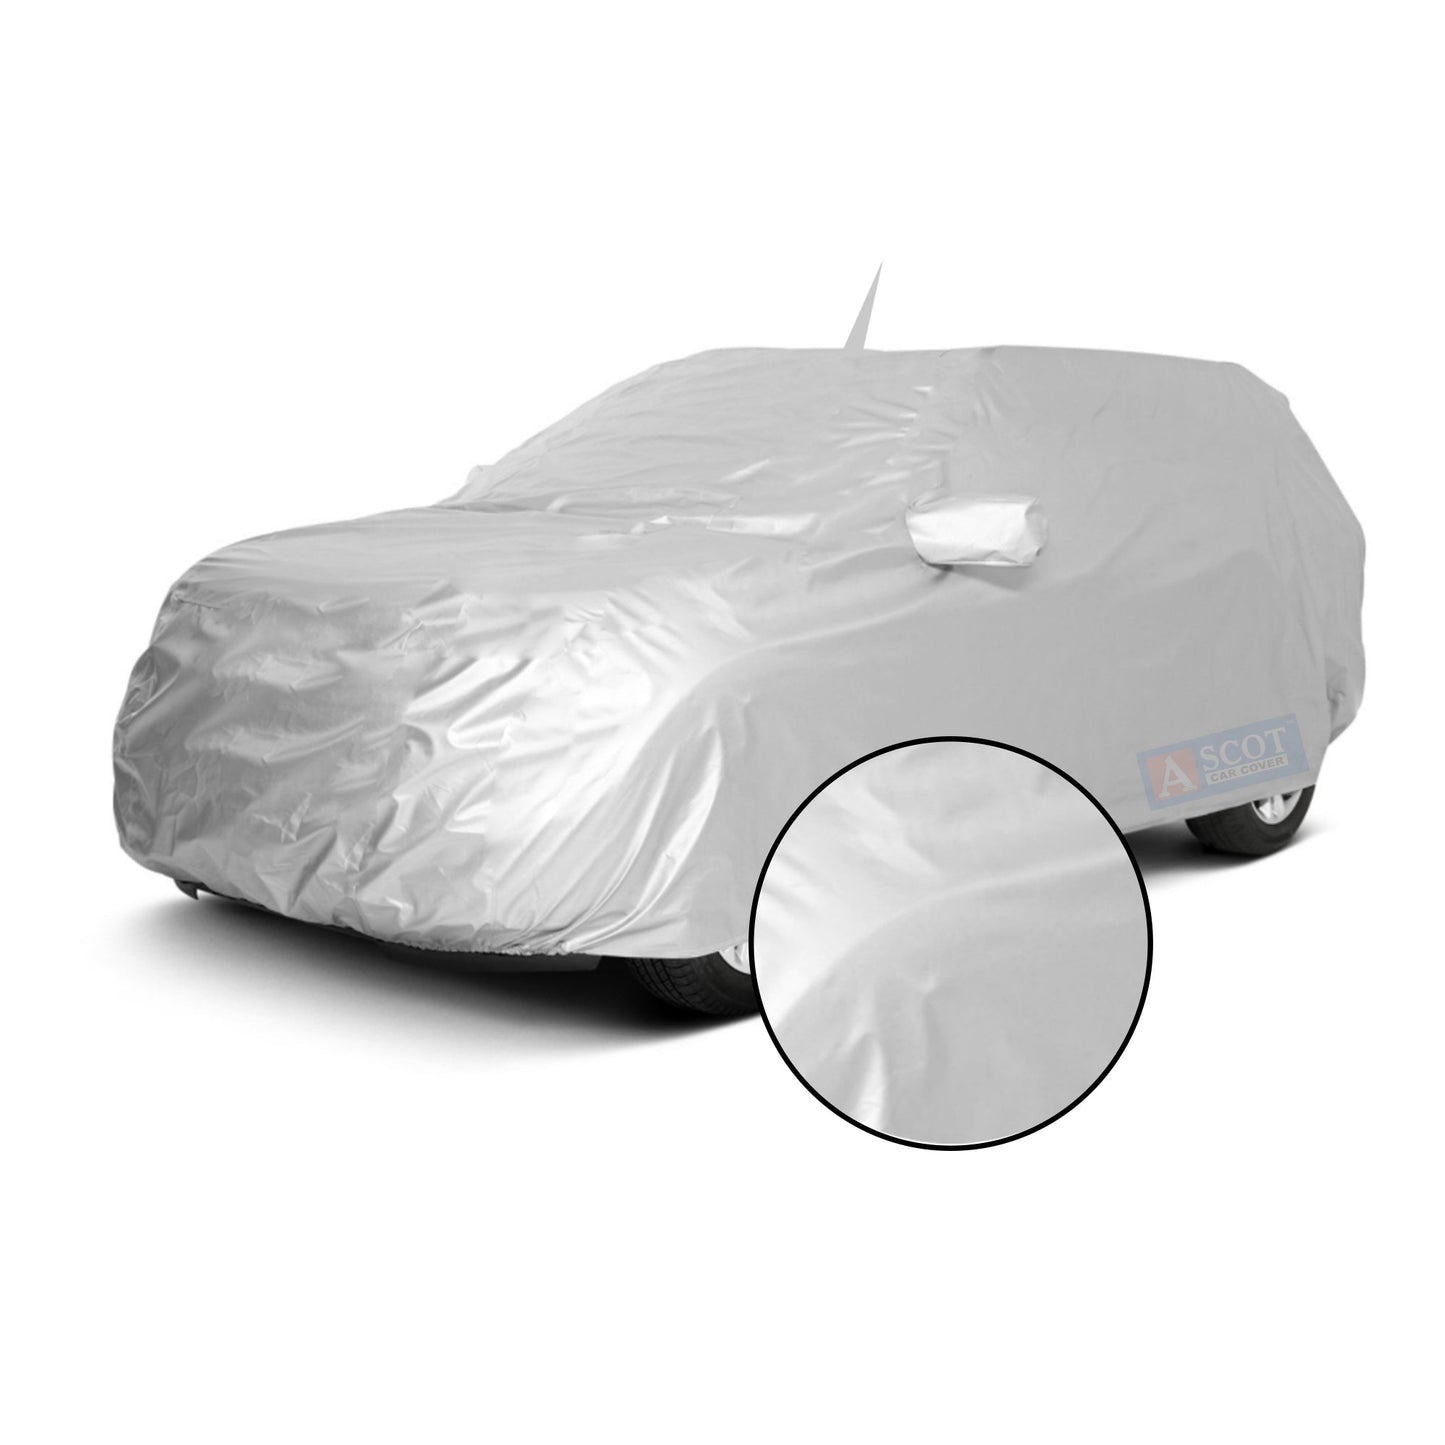 Ascot Mahindra Bolero Neo Car Body Cover Dust Proof, Trippel Stitched